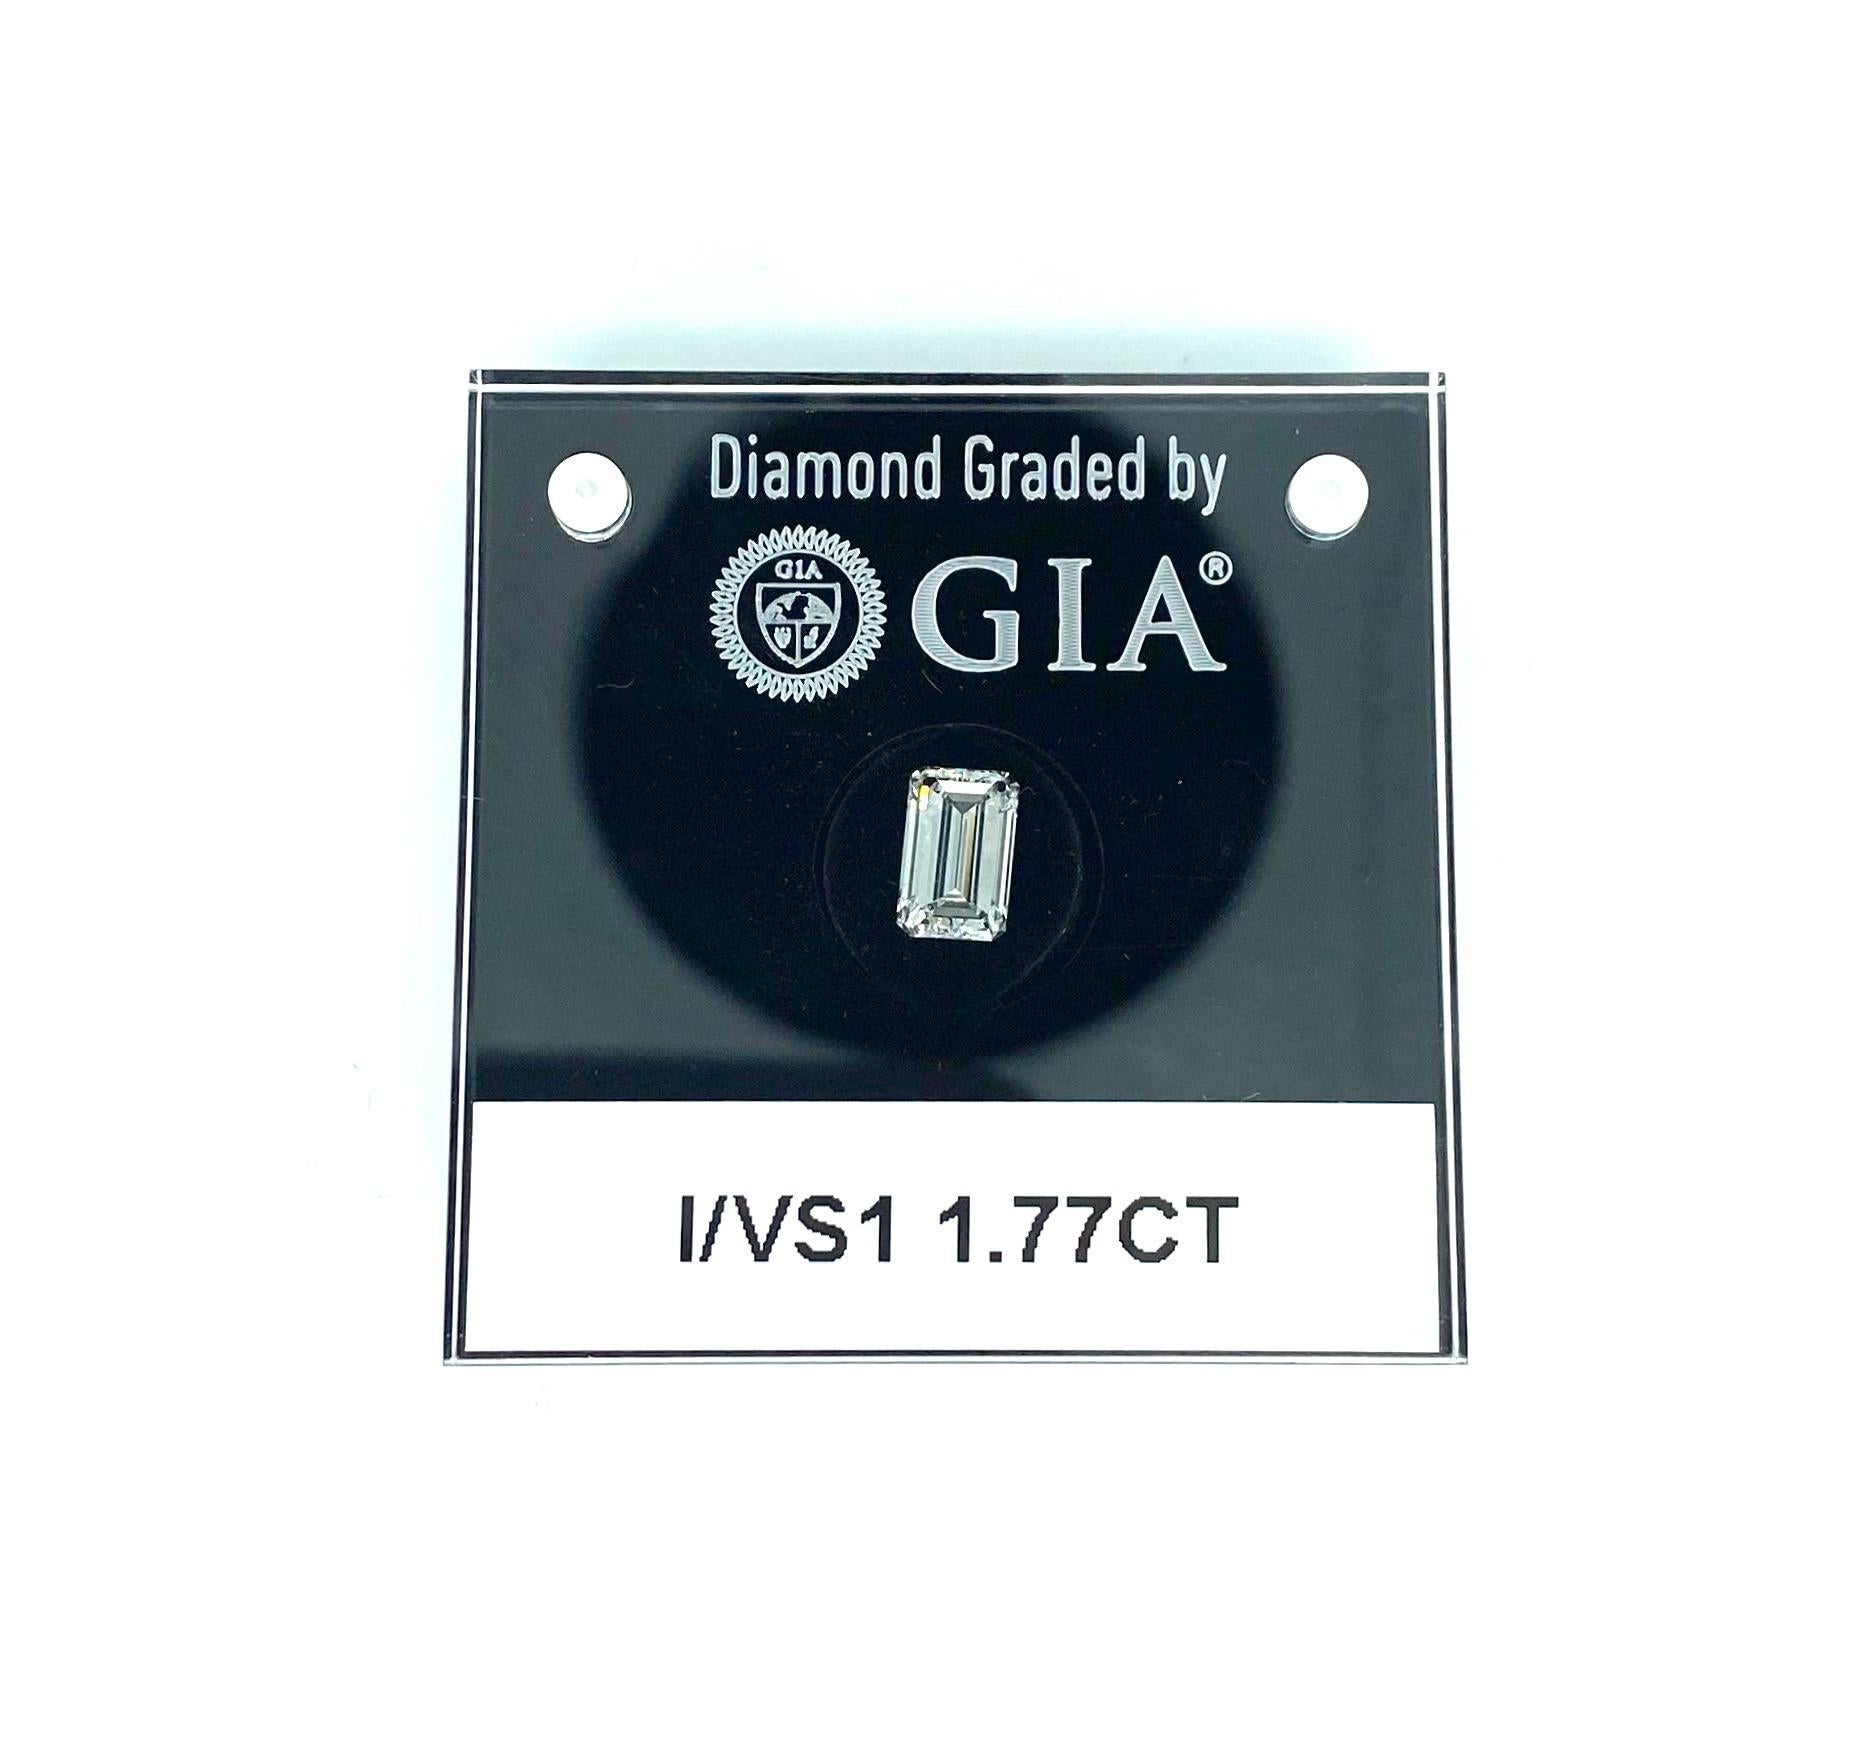 GIA Certified 1.77 Carat Emerald Cut Diamond
I / VS1

GIA certificate included
Report number: 2211297878